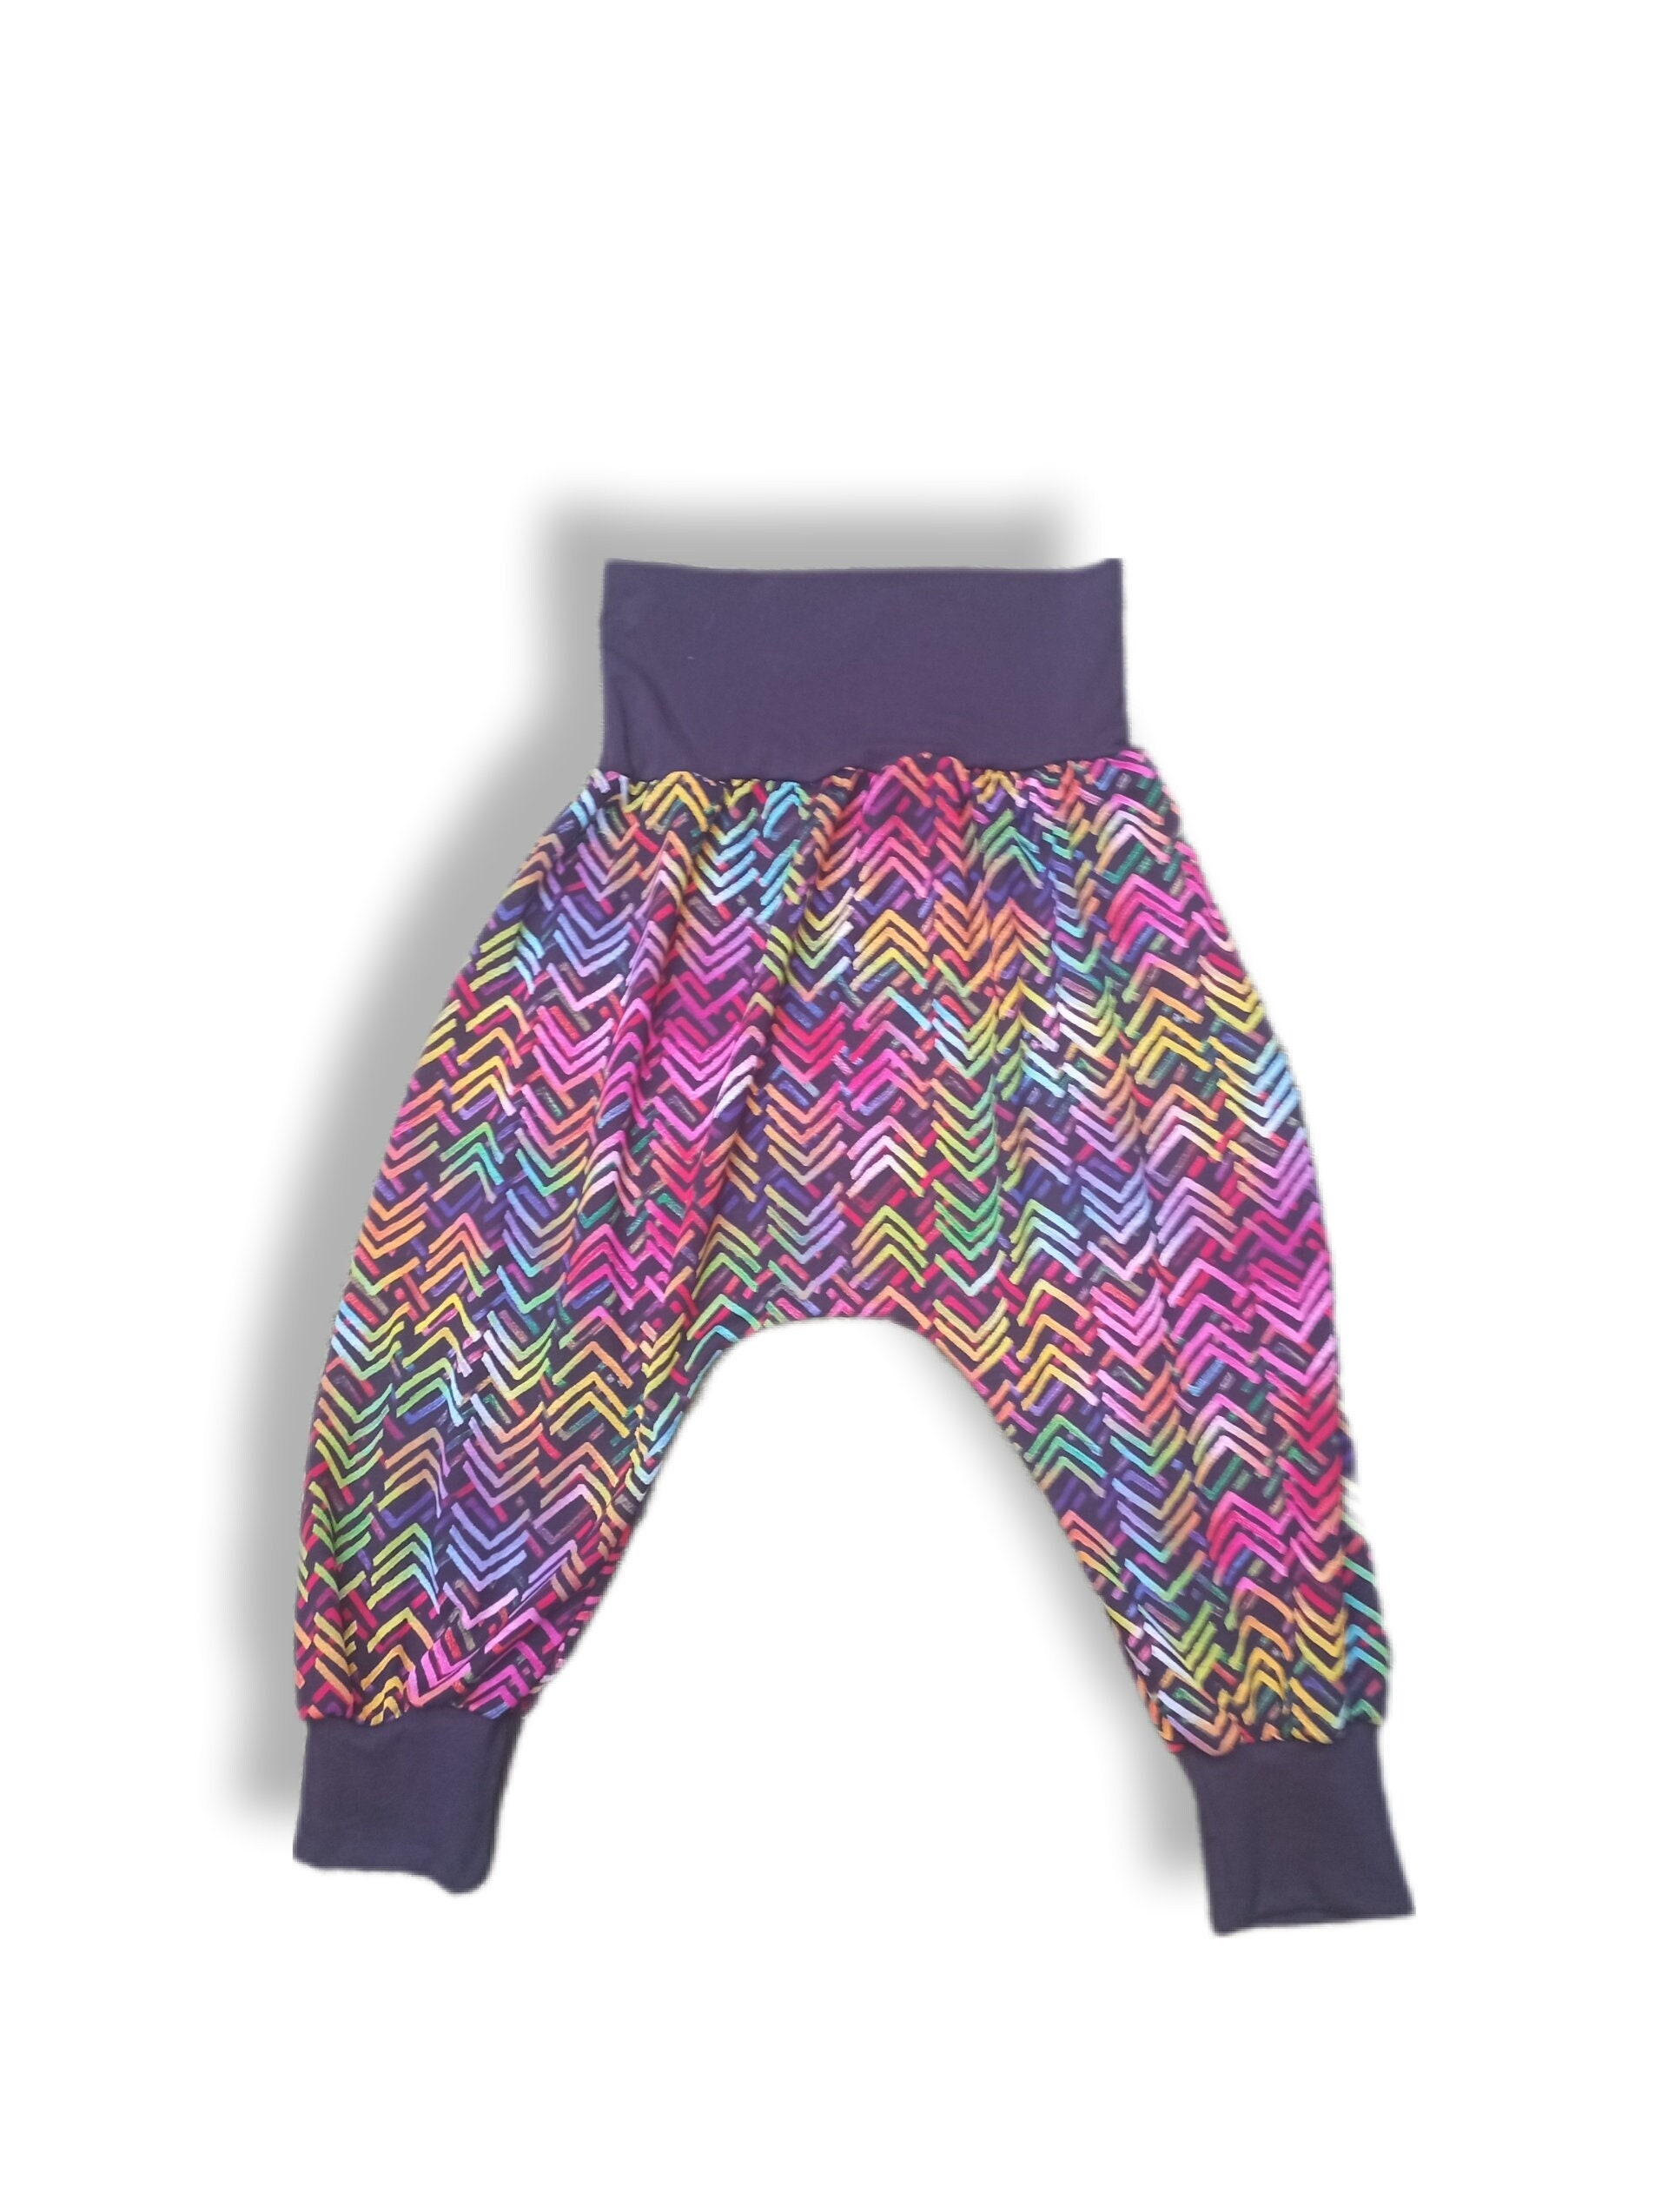 Pantalones de retazos de arcoíris para hombre hechos a mano multicolor  Hippie Boho Unisex Funky Hippy -  España